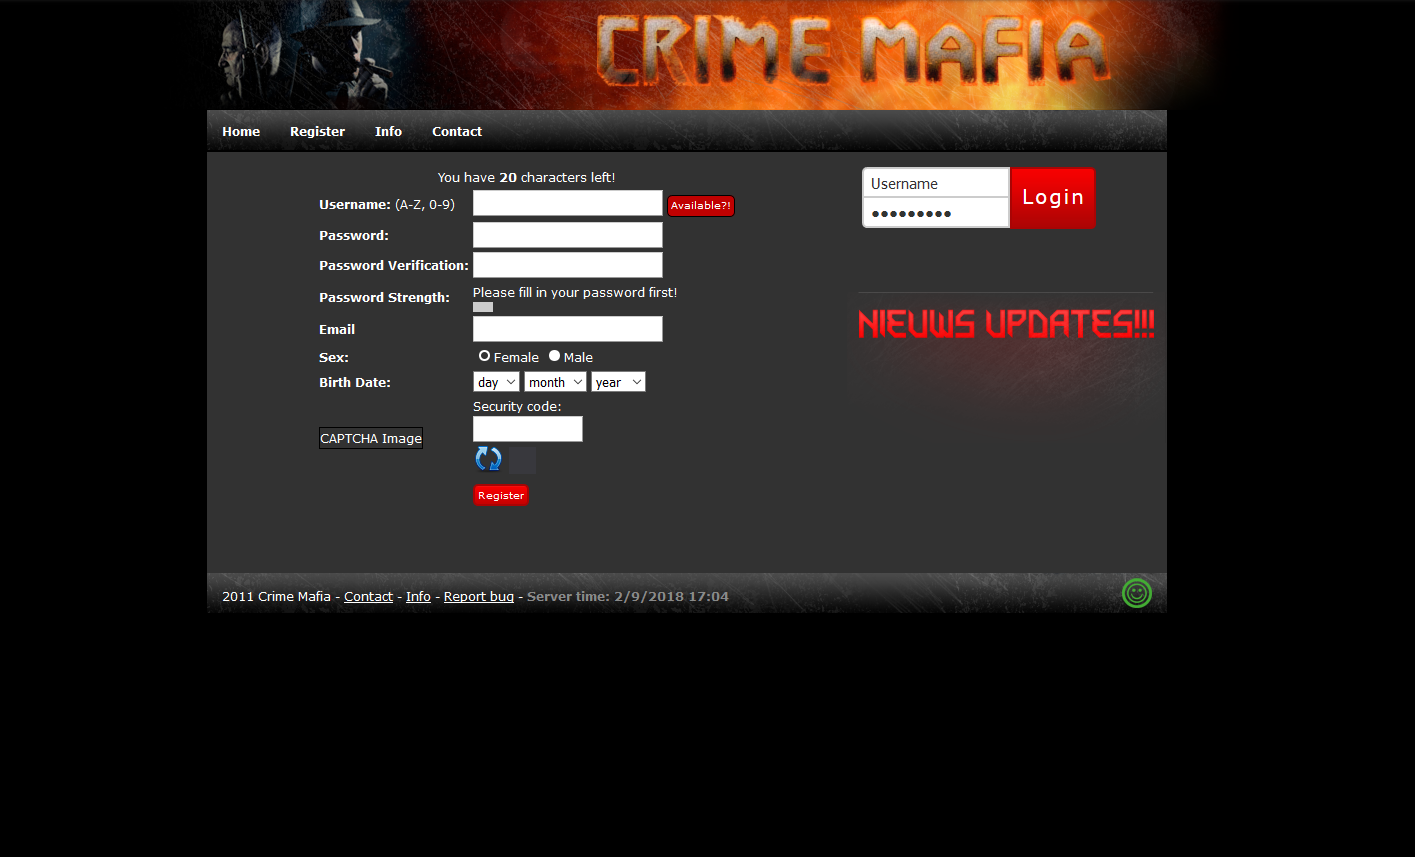 The registration page of the Crimemafia website.